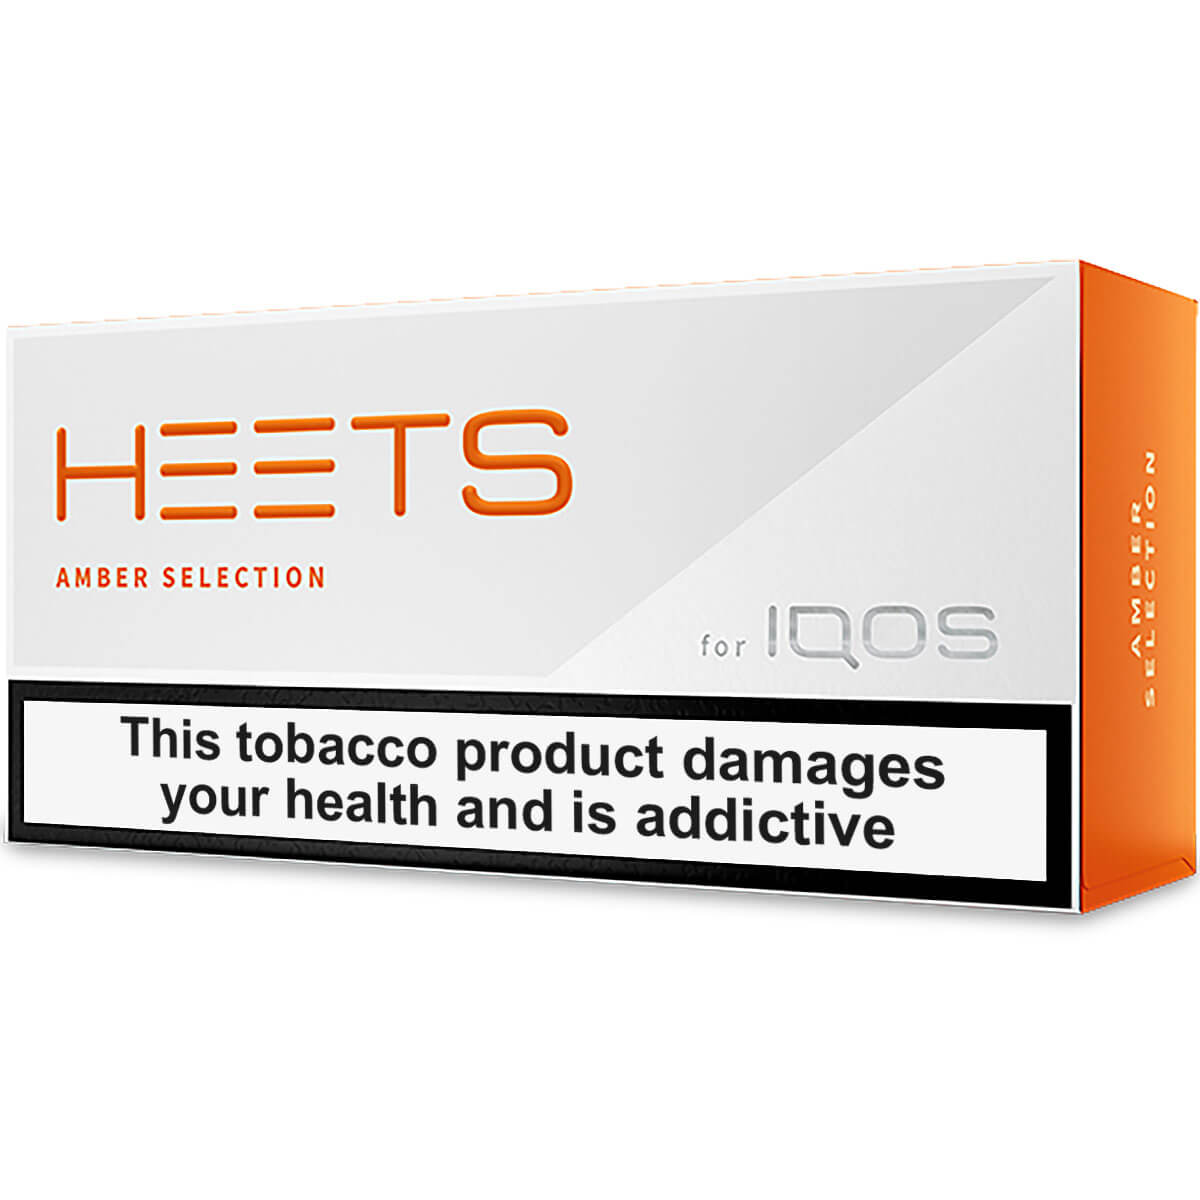 Turquoise TEREA Tobacco Sticks, IQOS Iluma Bulk Buy Carton